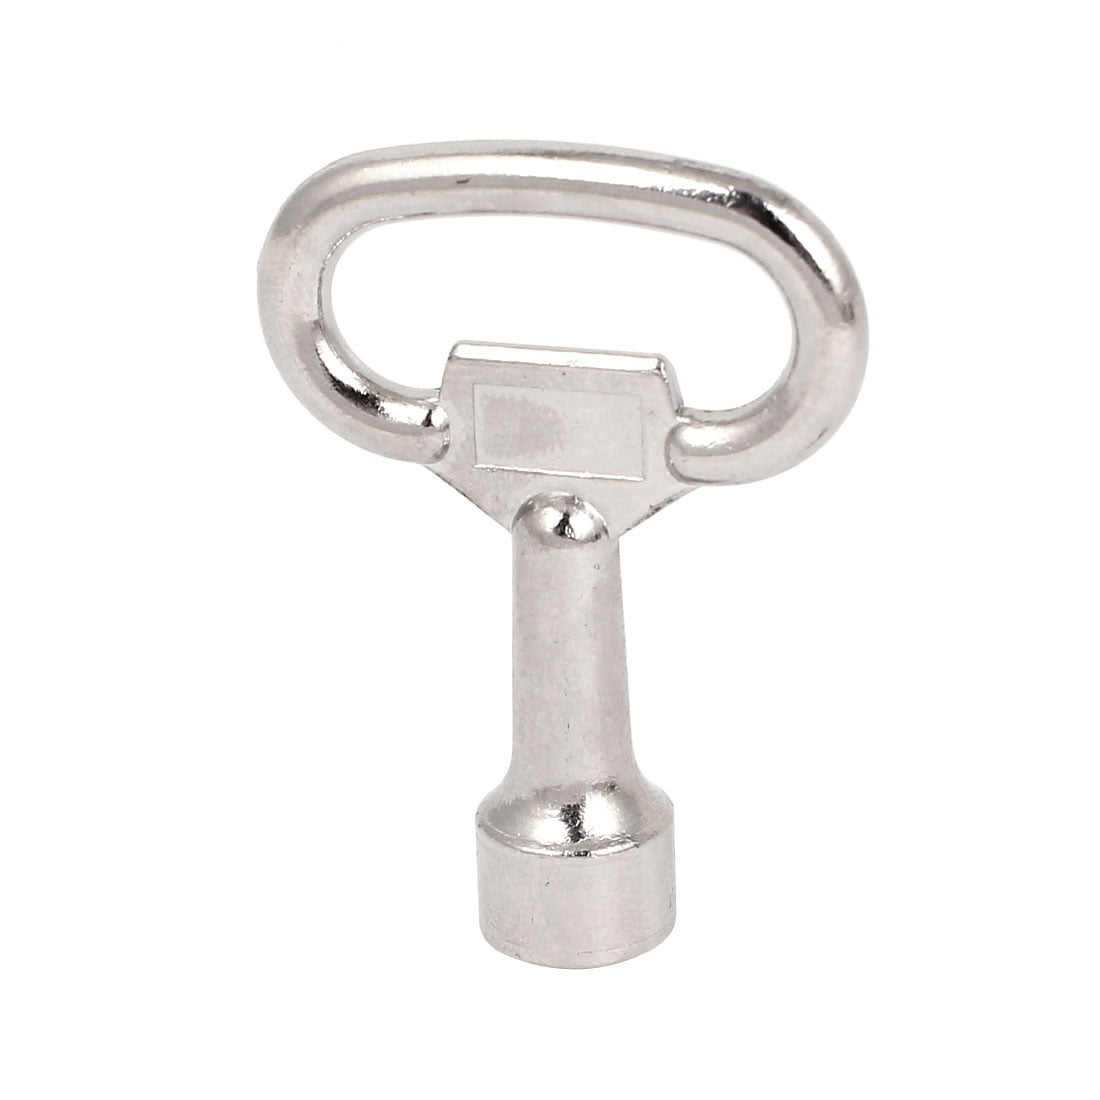 Steel Square Socket Spanner Key for 8 mm Panel Lock Mesan # 267.28 